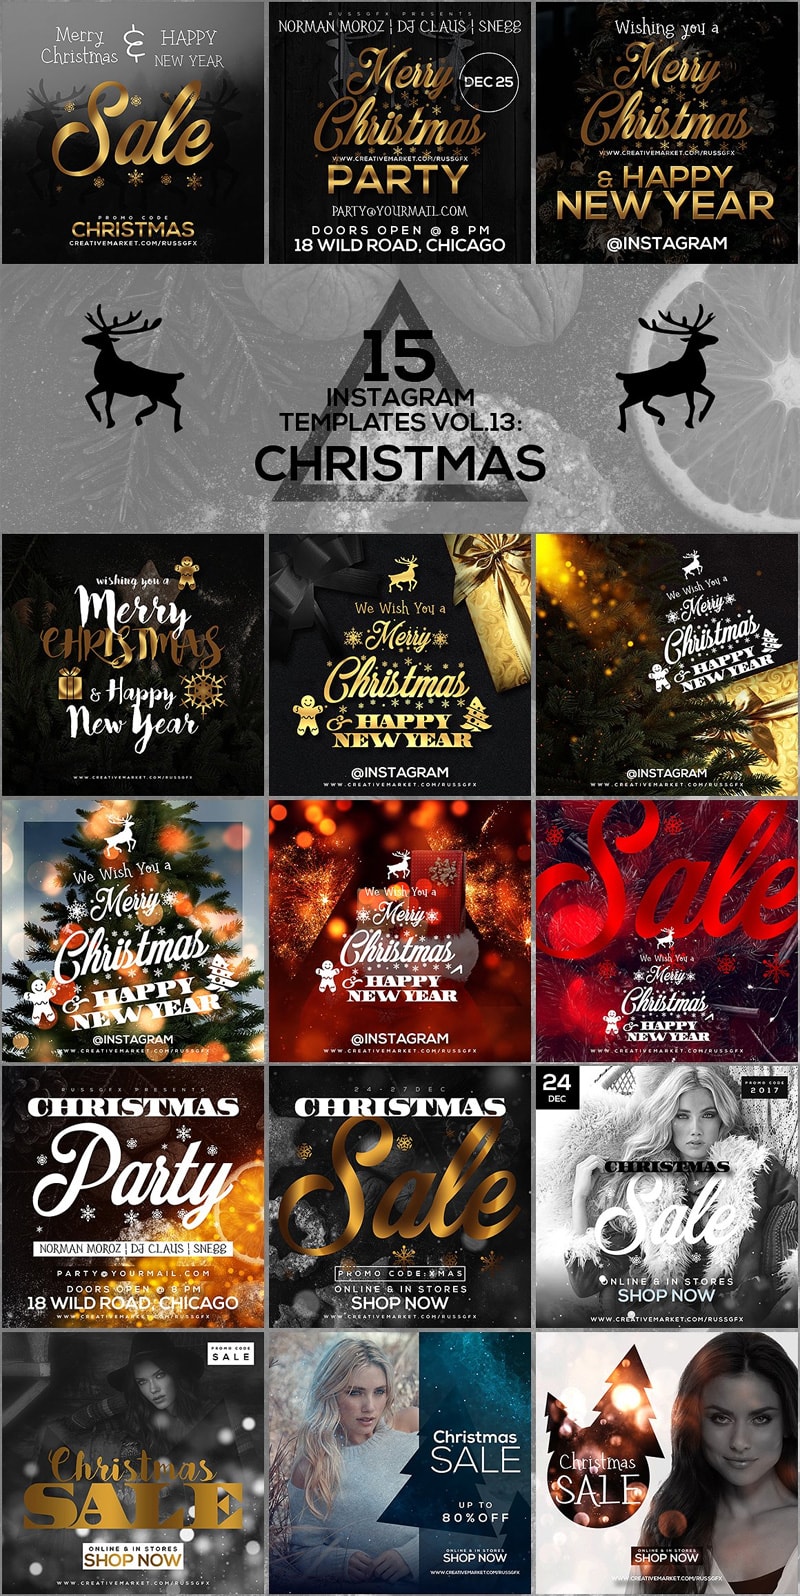 15 Instagram Templates: Christmas